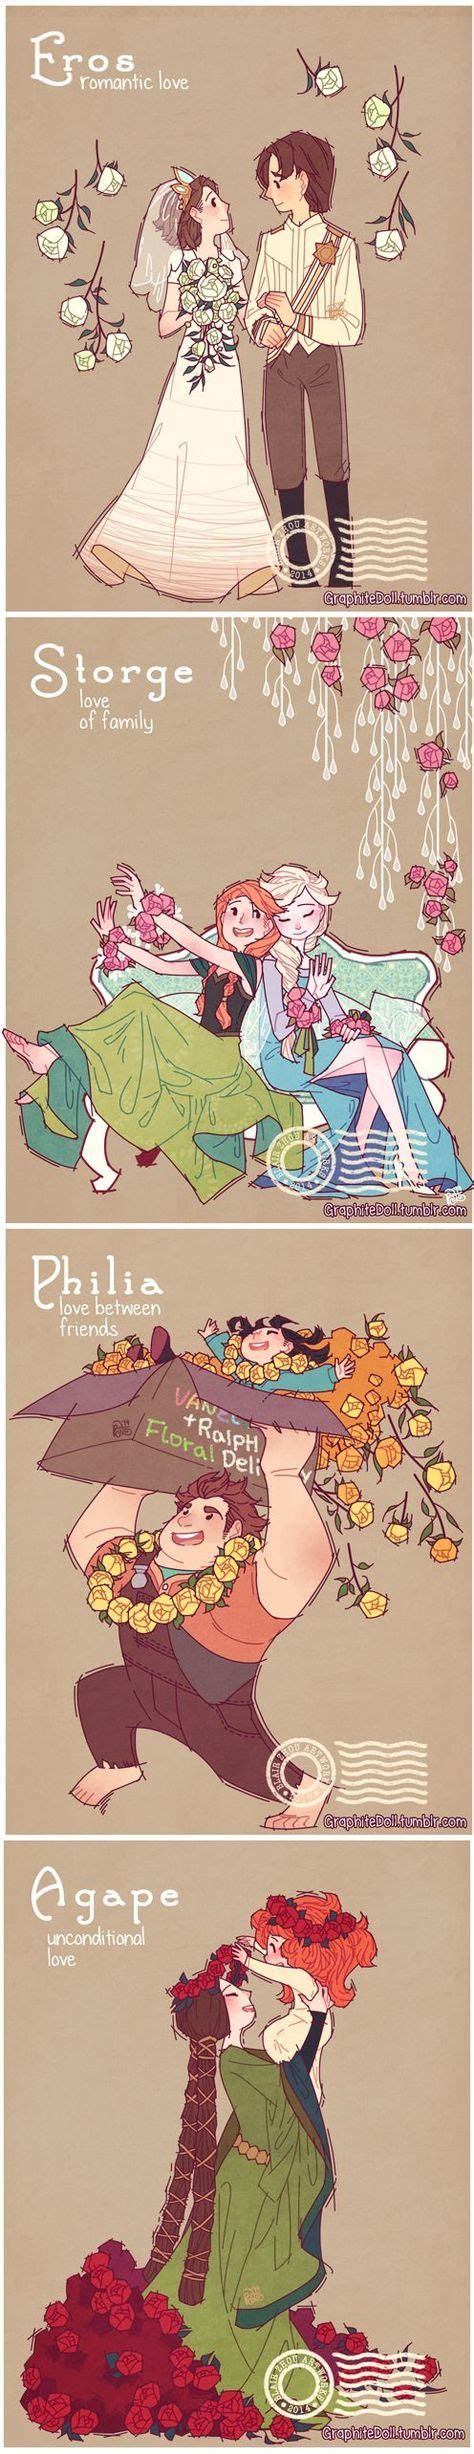 59 best disney racebent images on pinterest princesses cartoon and